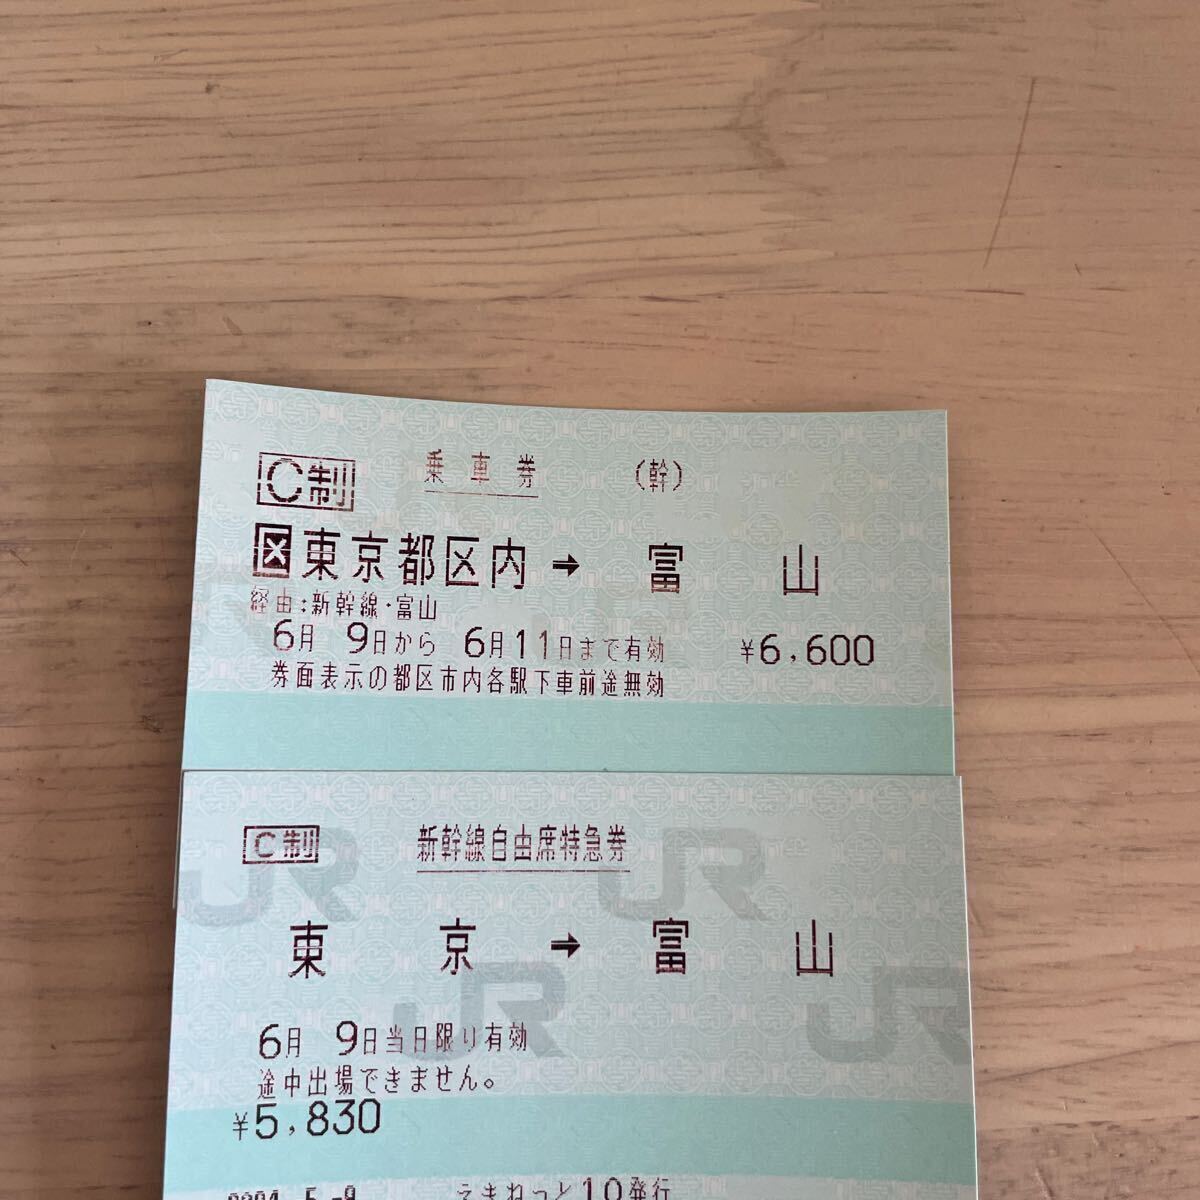  Tokyo - Toyama Shinkansen ticket free seat..3 name minute 